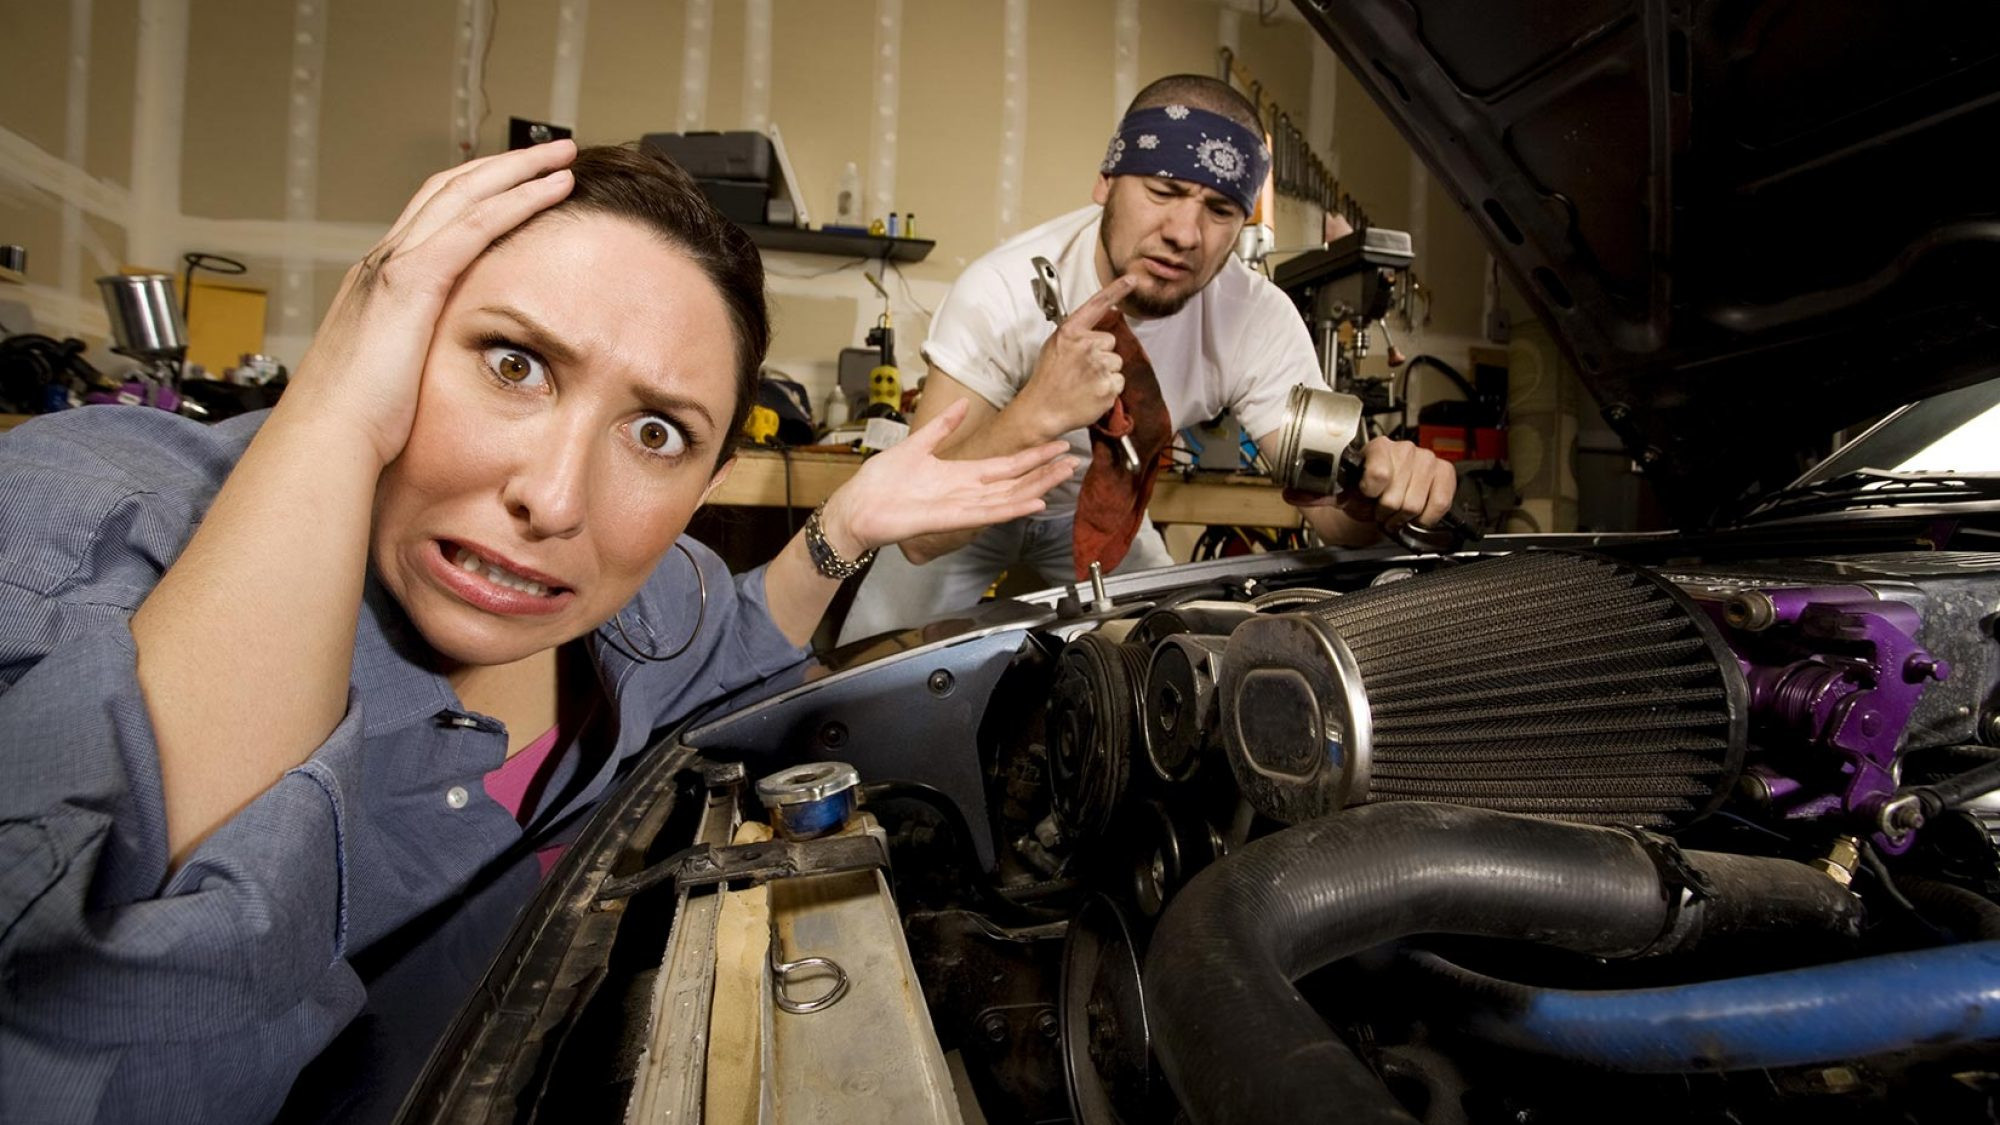 How to choose a mechanic?